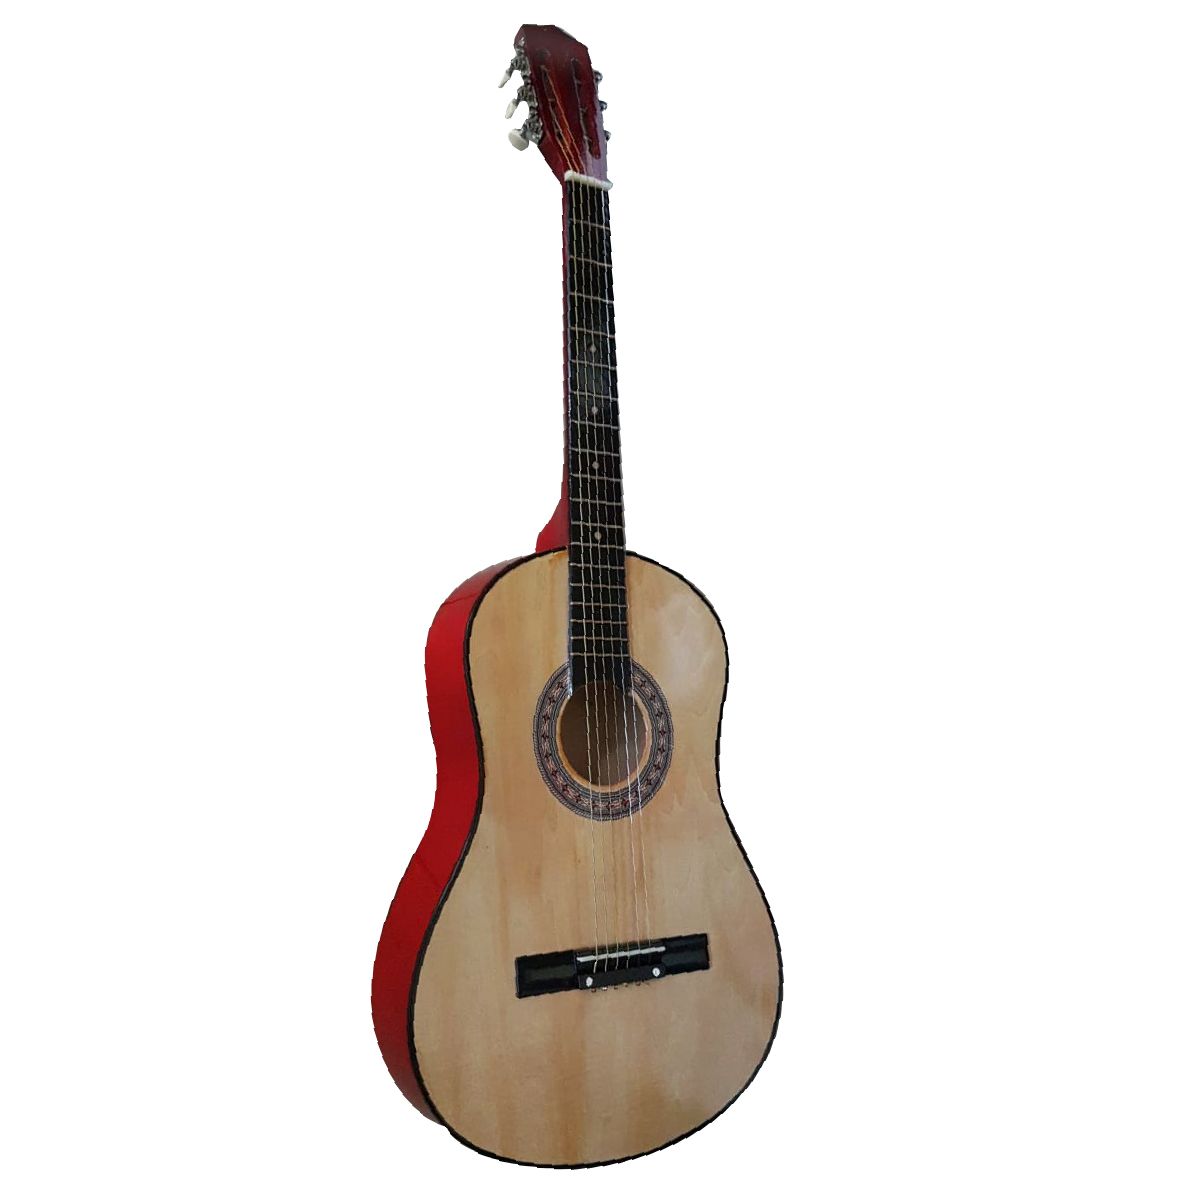 Acoustic Guitar Wooden, 831 WOODEN